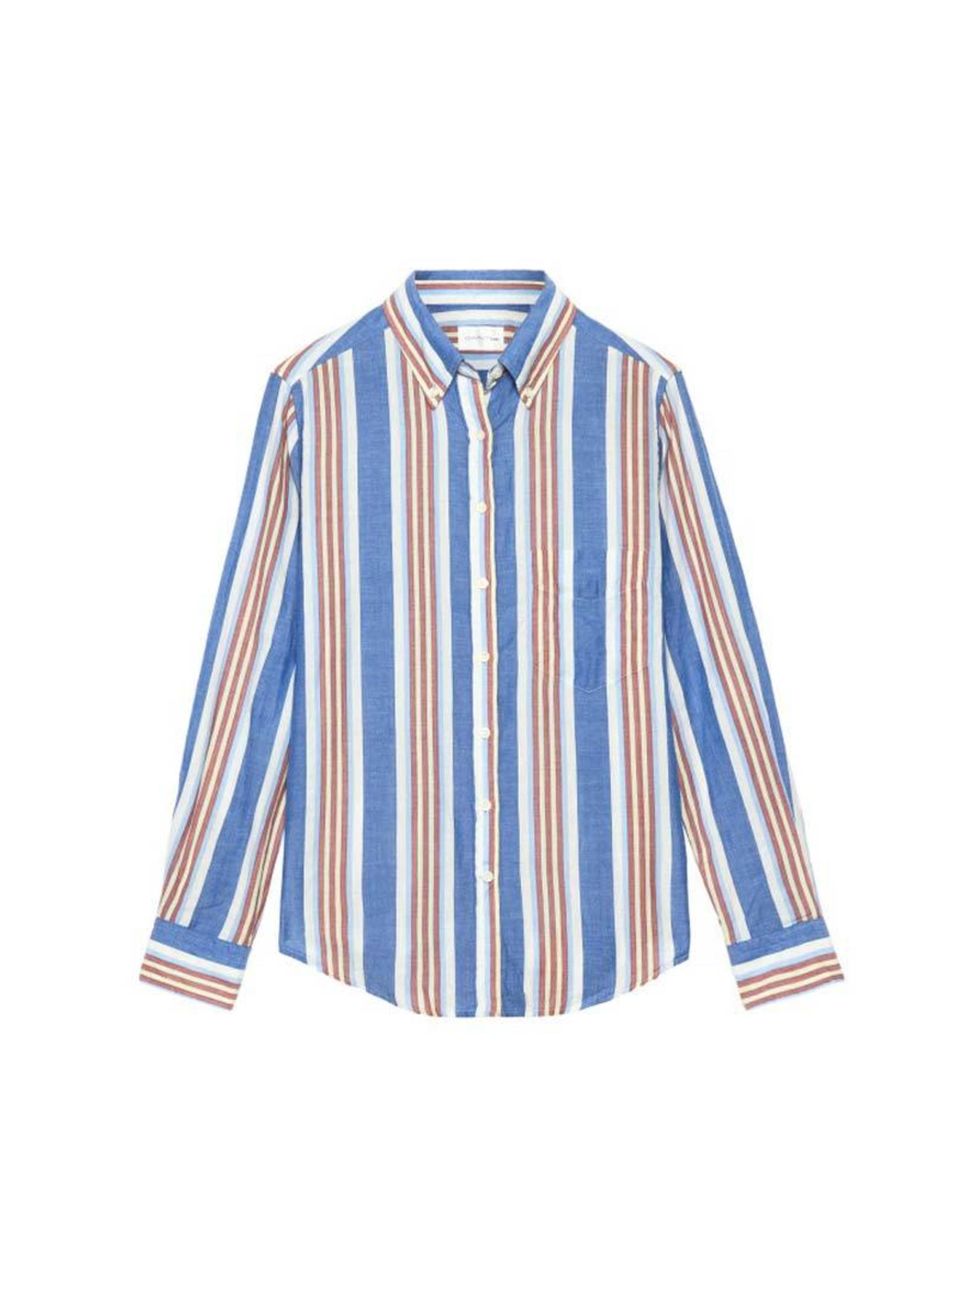 <p>It's boyish stripes for Freelance Picture Assistant Catherine Pykett.</p>

<p><a href="http://www.gant.co.uk/womens-shirts/bluegrey-her-madras-shirt/33191" target="_blank">Gant Rugger</a> shirt, £80</p>